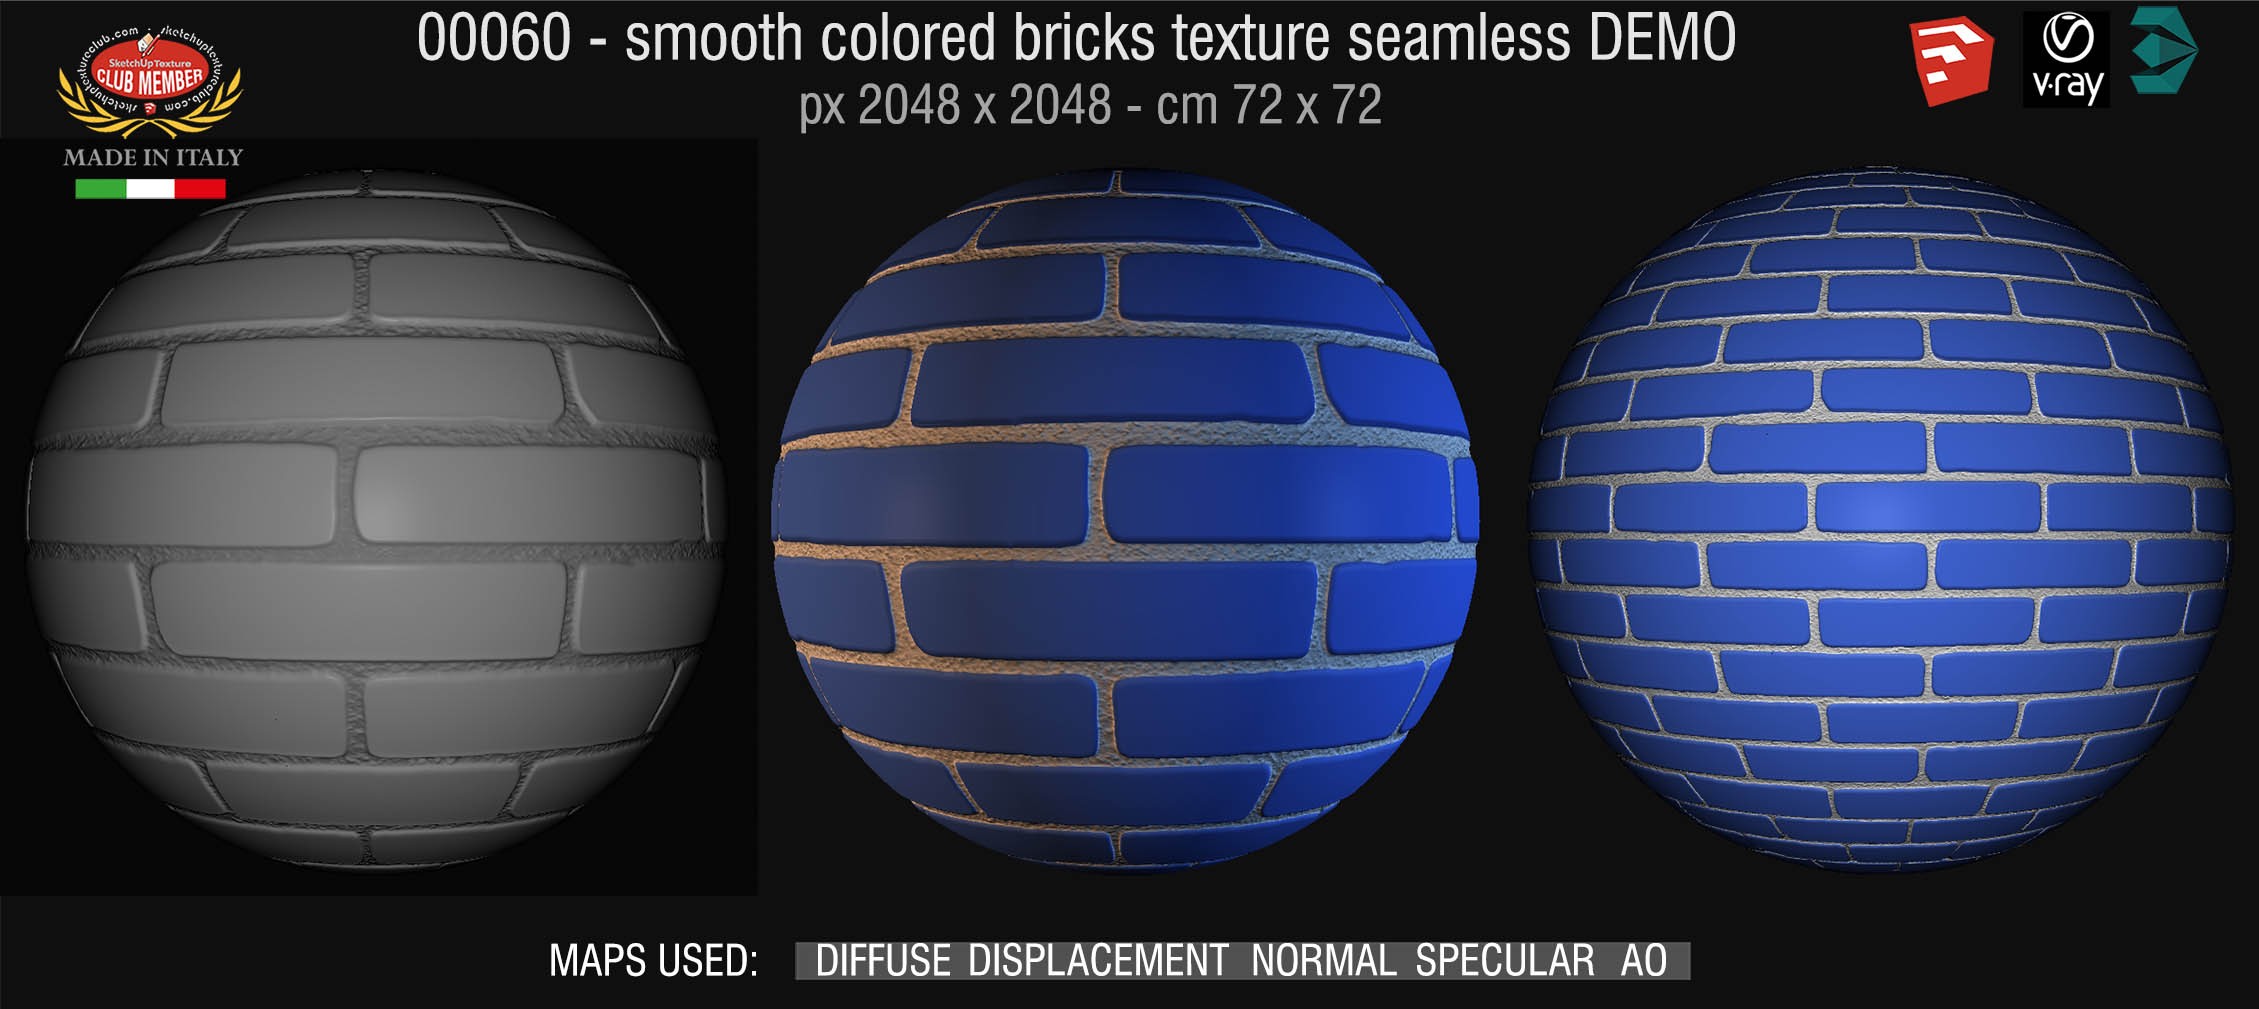 00060 smooth colored bricks texture seamless + maps DEMO